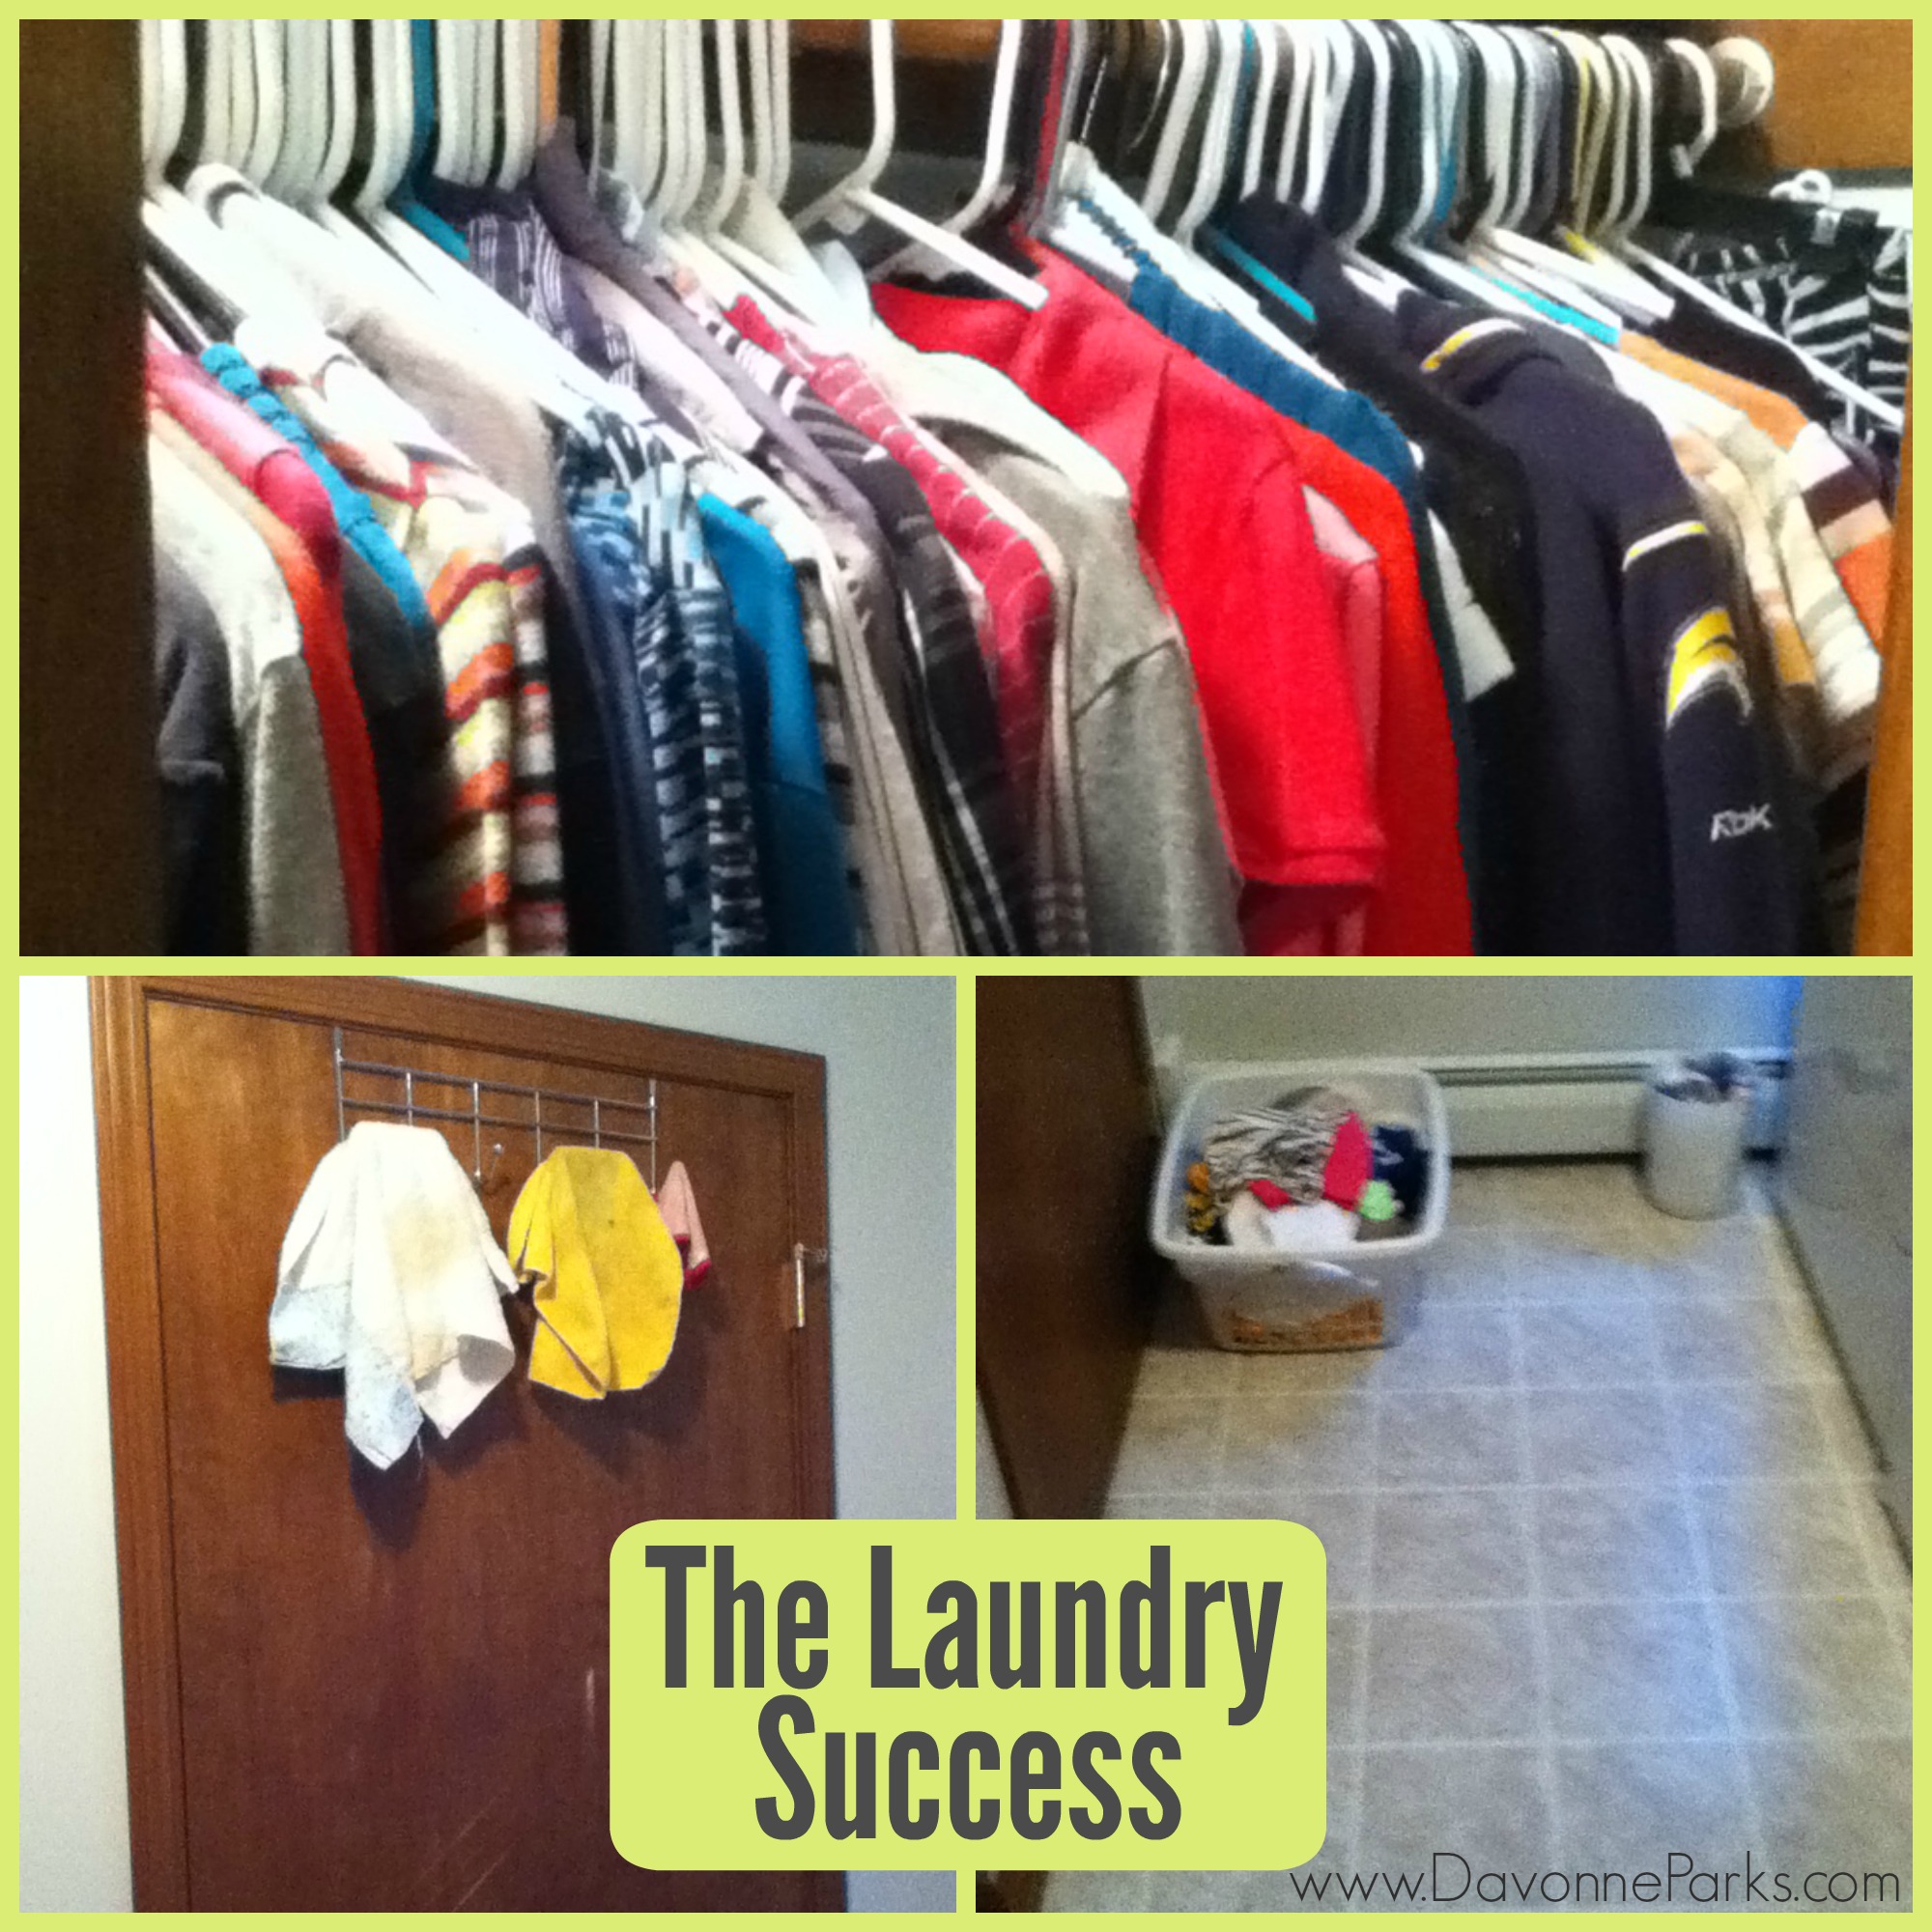 LaundrySuccess